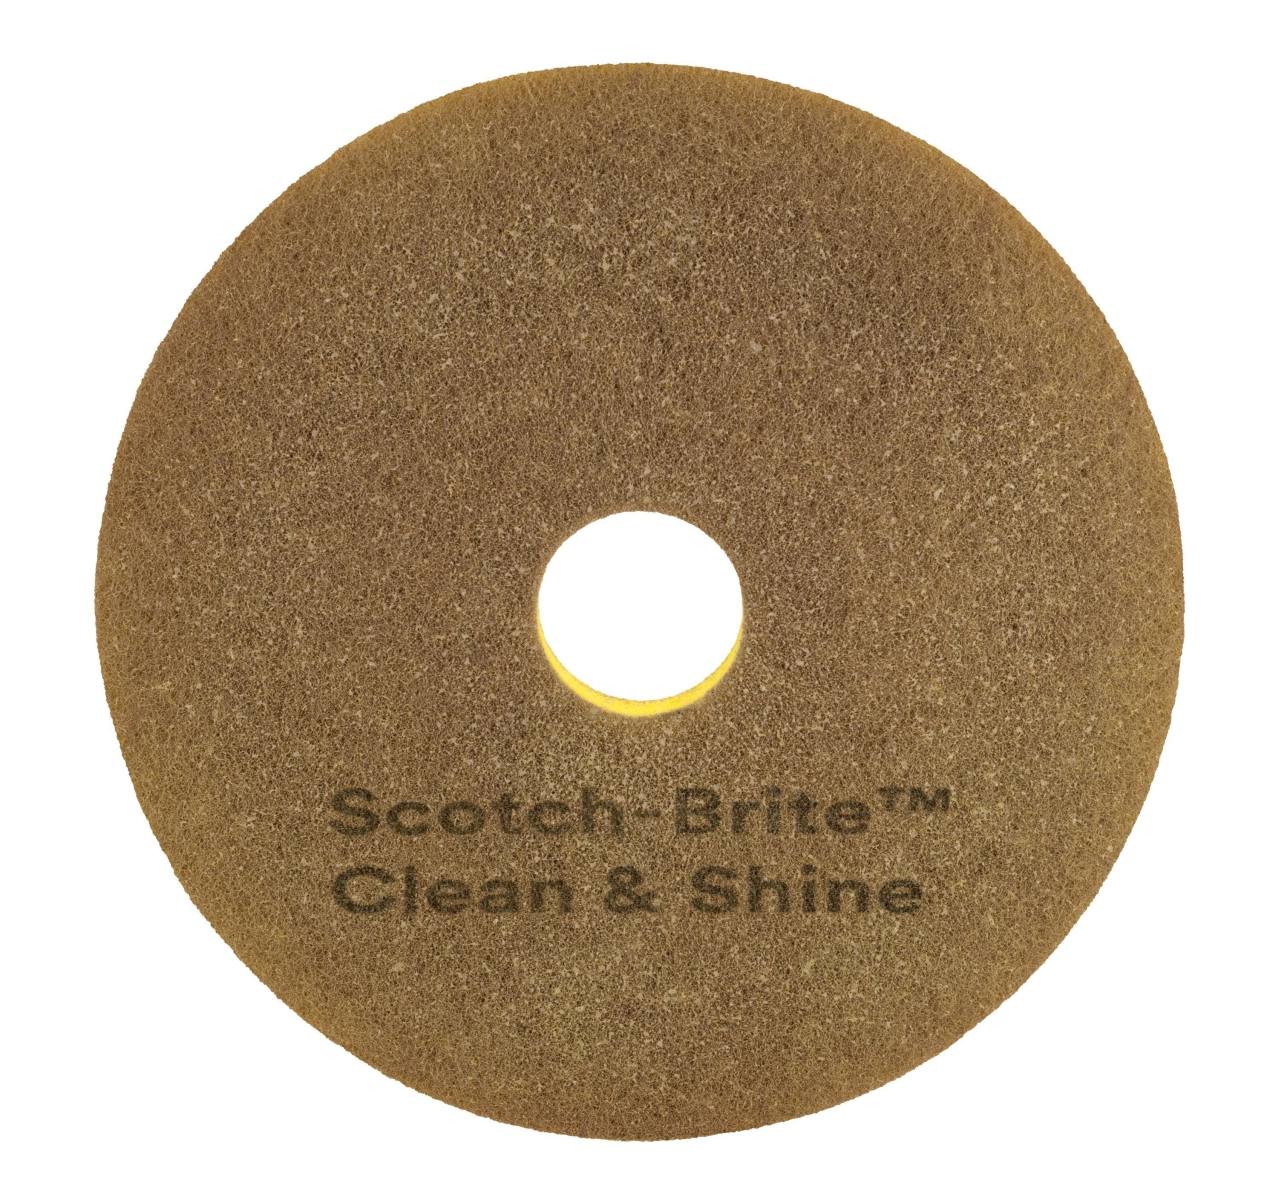 3M Scotch-Brite Clean & Shine Maschinenpad, 330 mm, 5 Stück / Karton